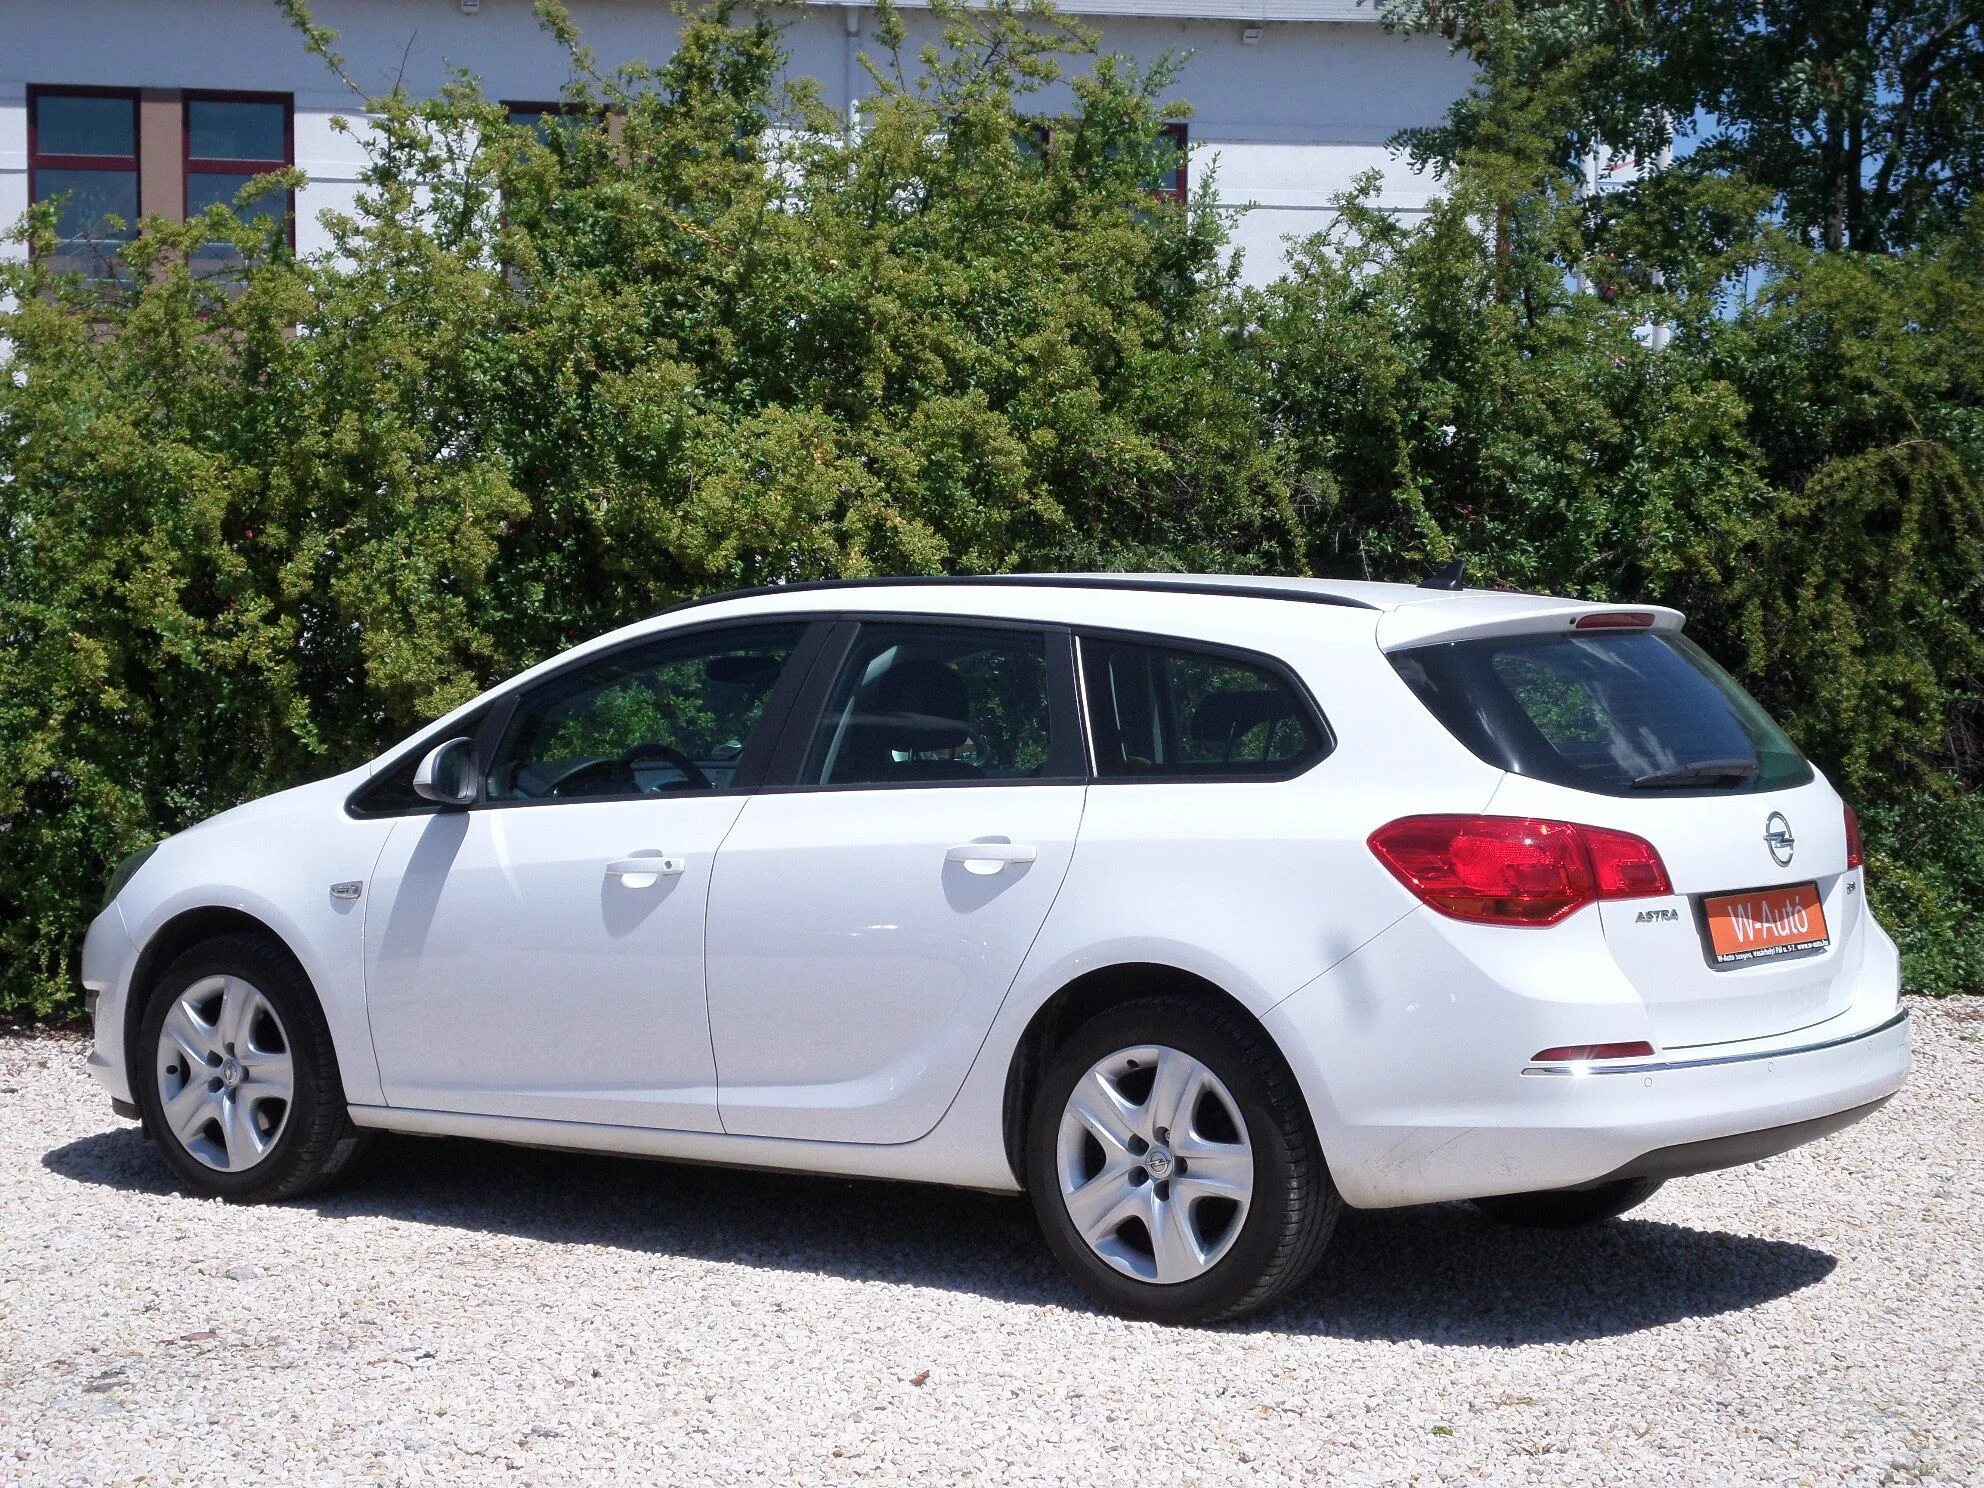 Opel Astra универсал 2011. Opel Astra j 2011 универсал. Opel Astra h универсал 2011. Опель универсал 2011